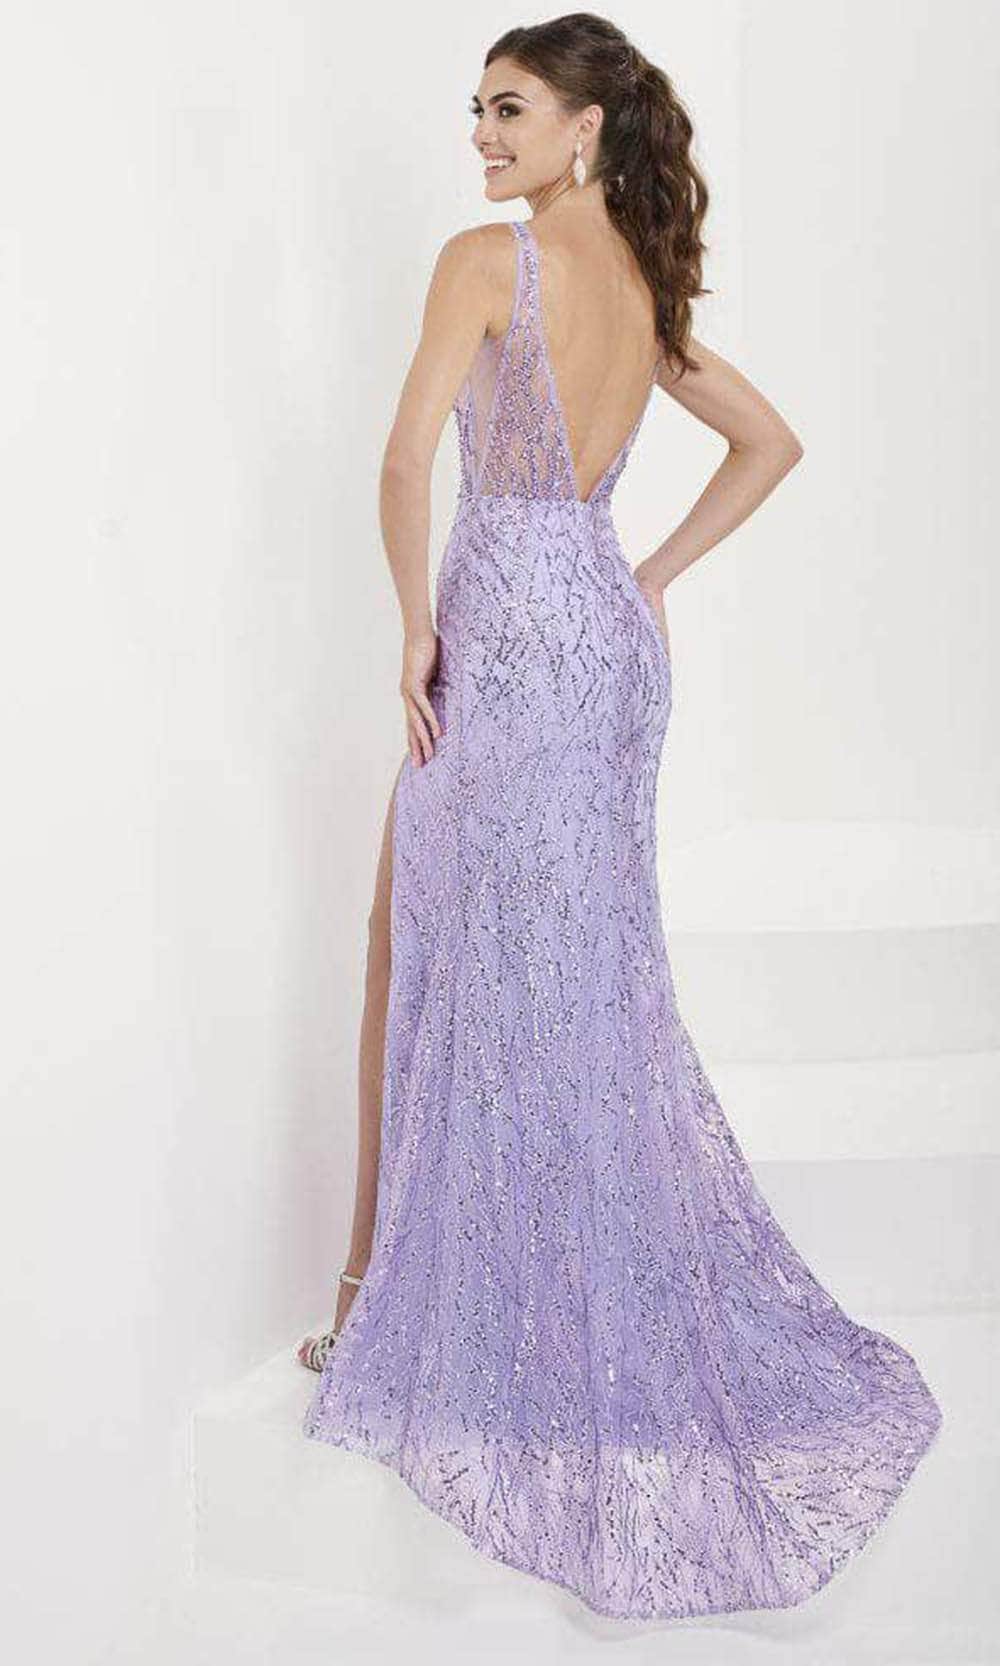 Tiffany Designs 16084 - Sleeveless Illusion Bodice Evening Gown Evening Dresses